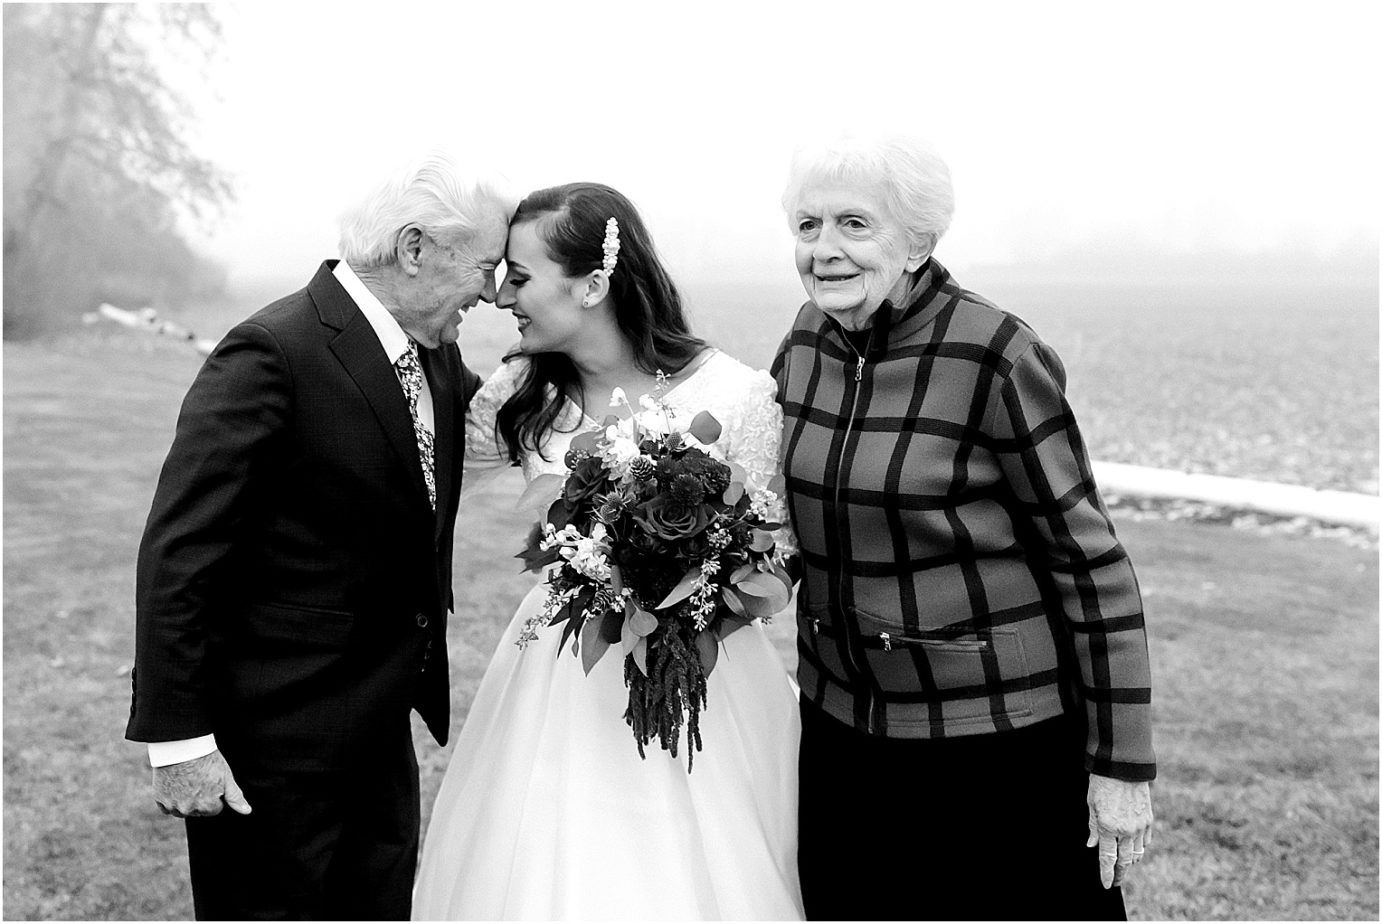 Ellensburg backyard wedding- bride with her grandpa